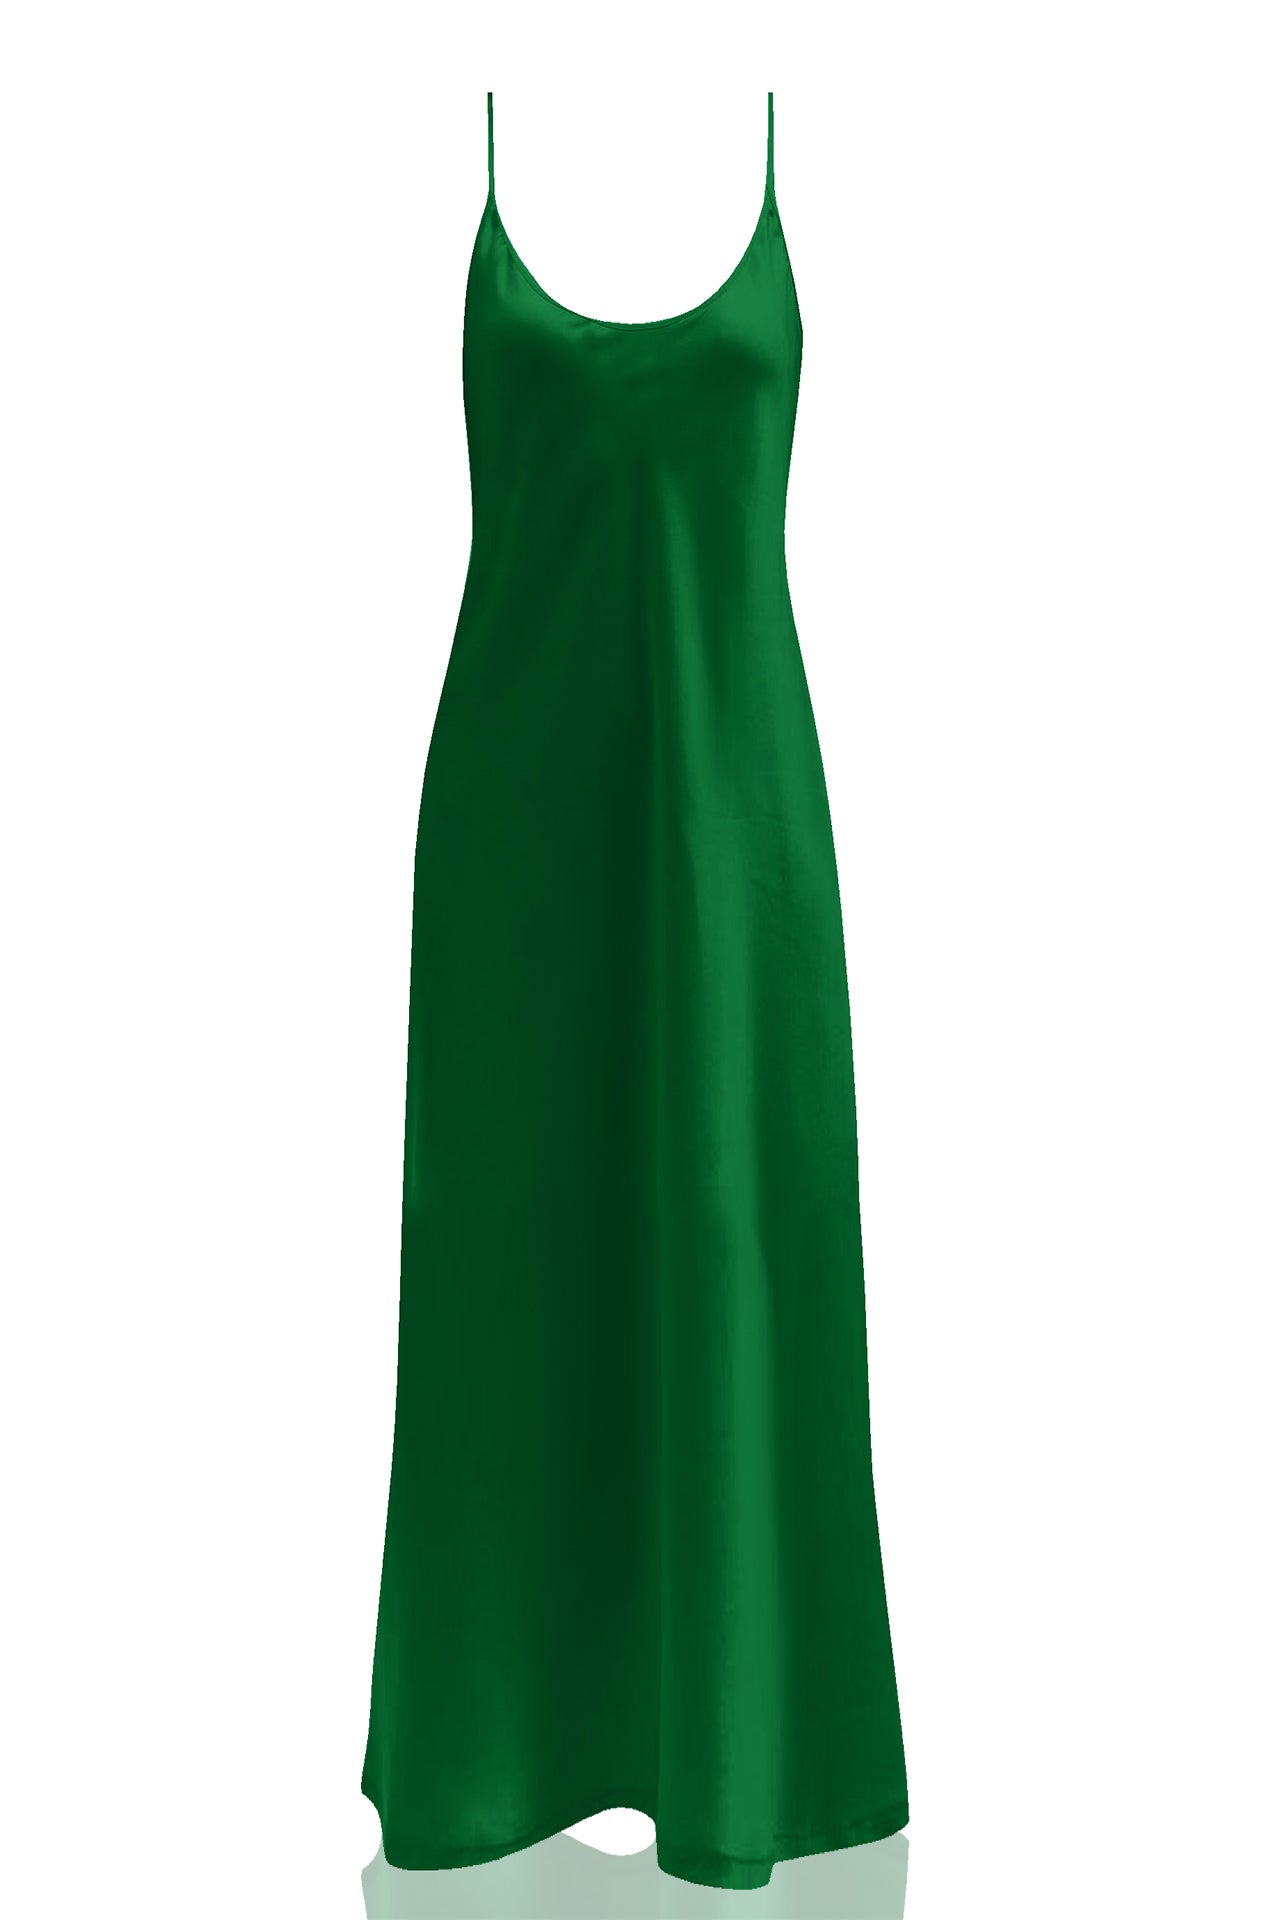 "Kyle X Shahida" "long silk slip" "silk green slip dress" "maxi dress with slip"